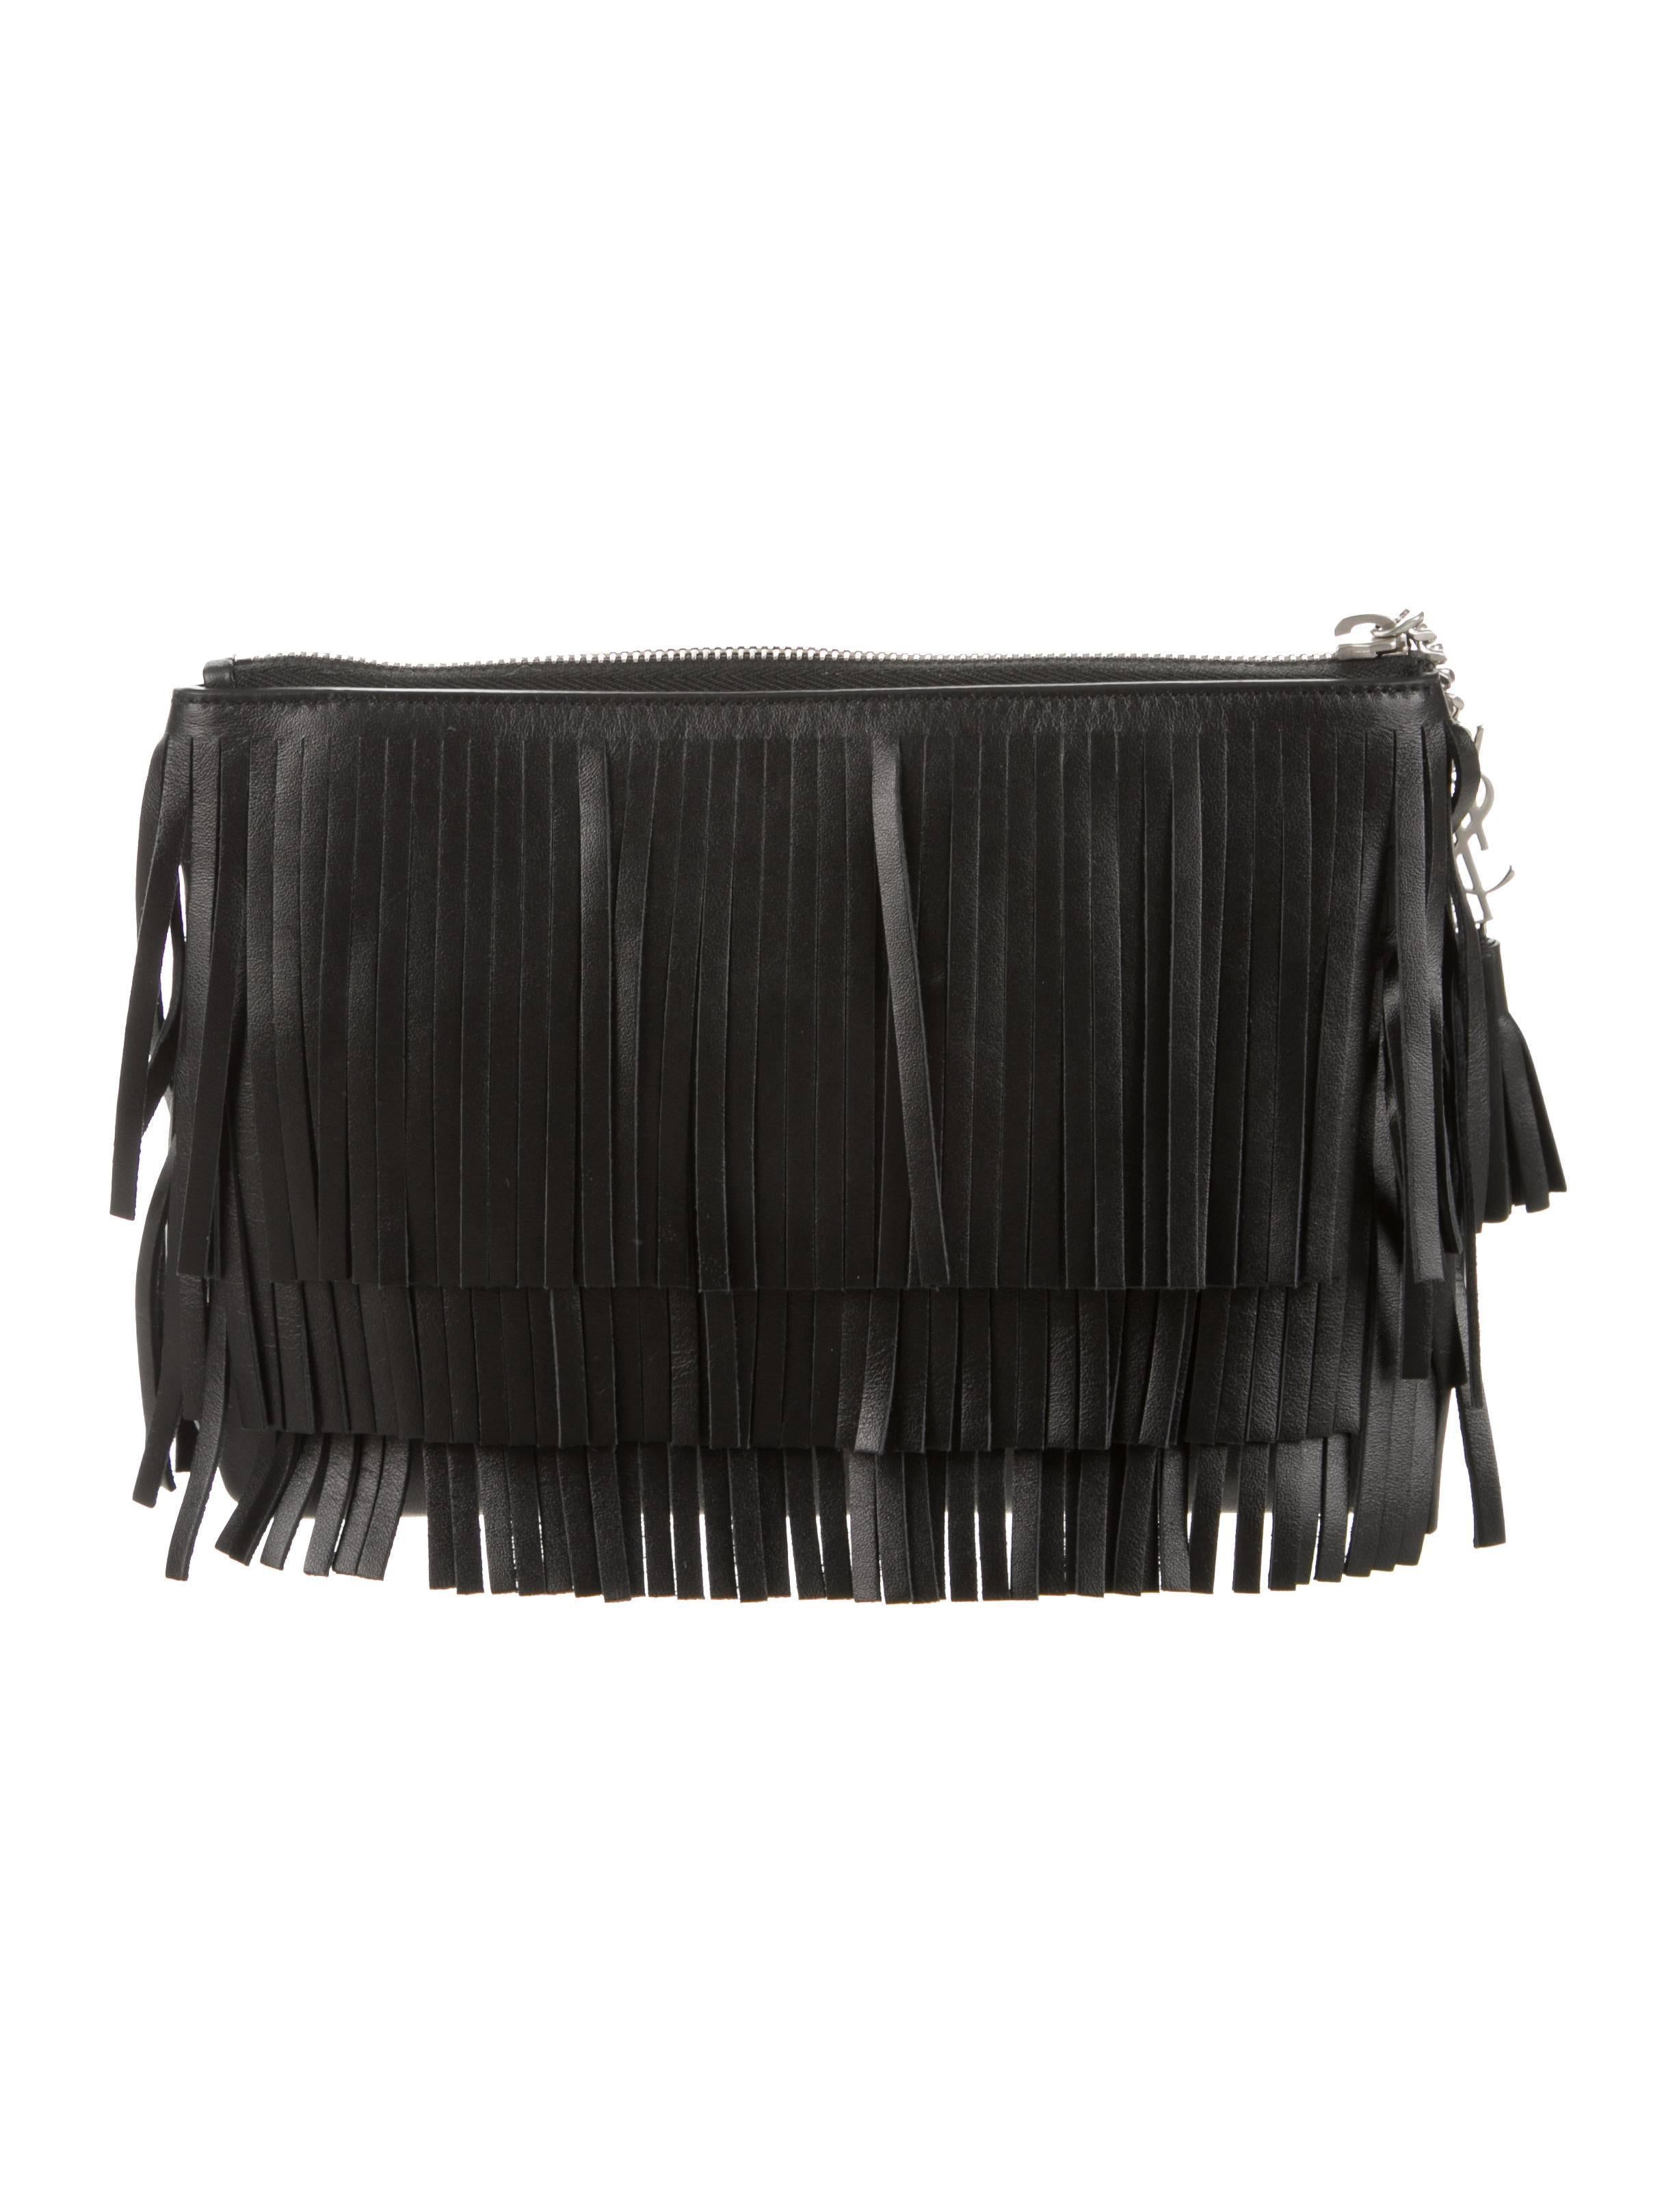 Women's Saint Laurent NEW & SOLD OUT Black Leather Evening Clutch Bag